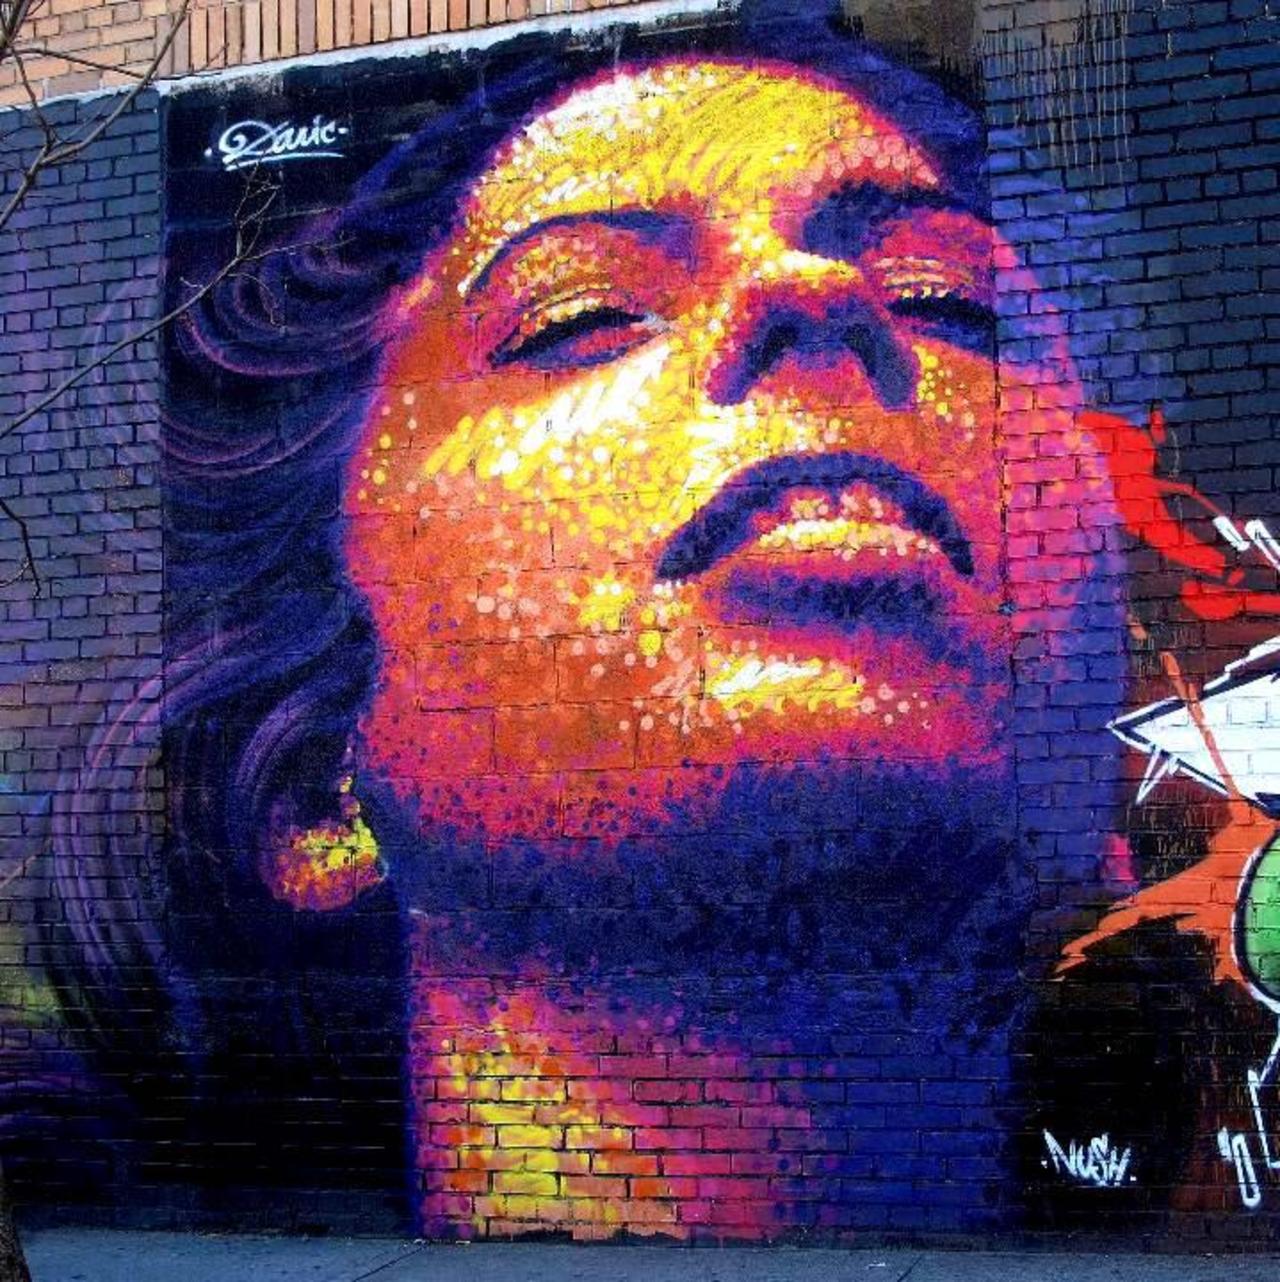 “@Pitchuskita: Dasic 
South Bronx
#streetart #art #graffiti #mural http://t.co/YmCeRCH3bG”